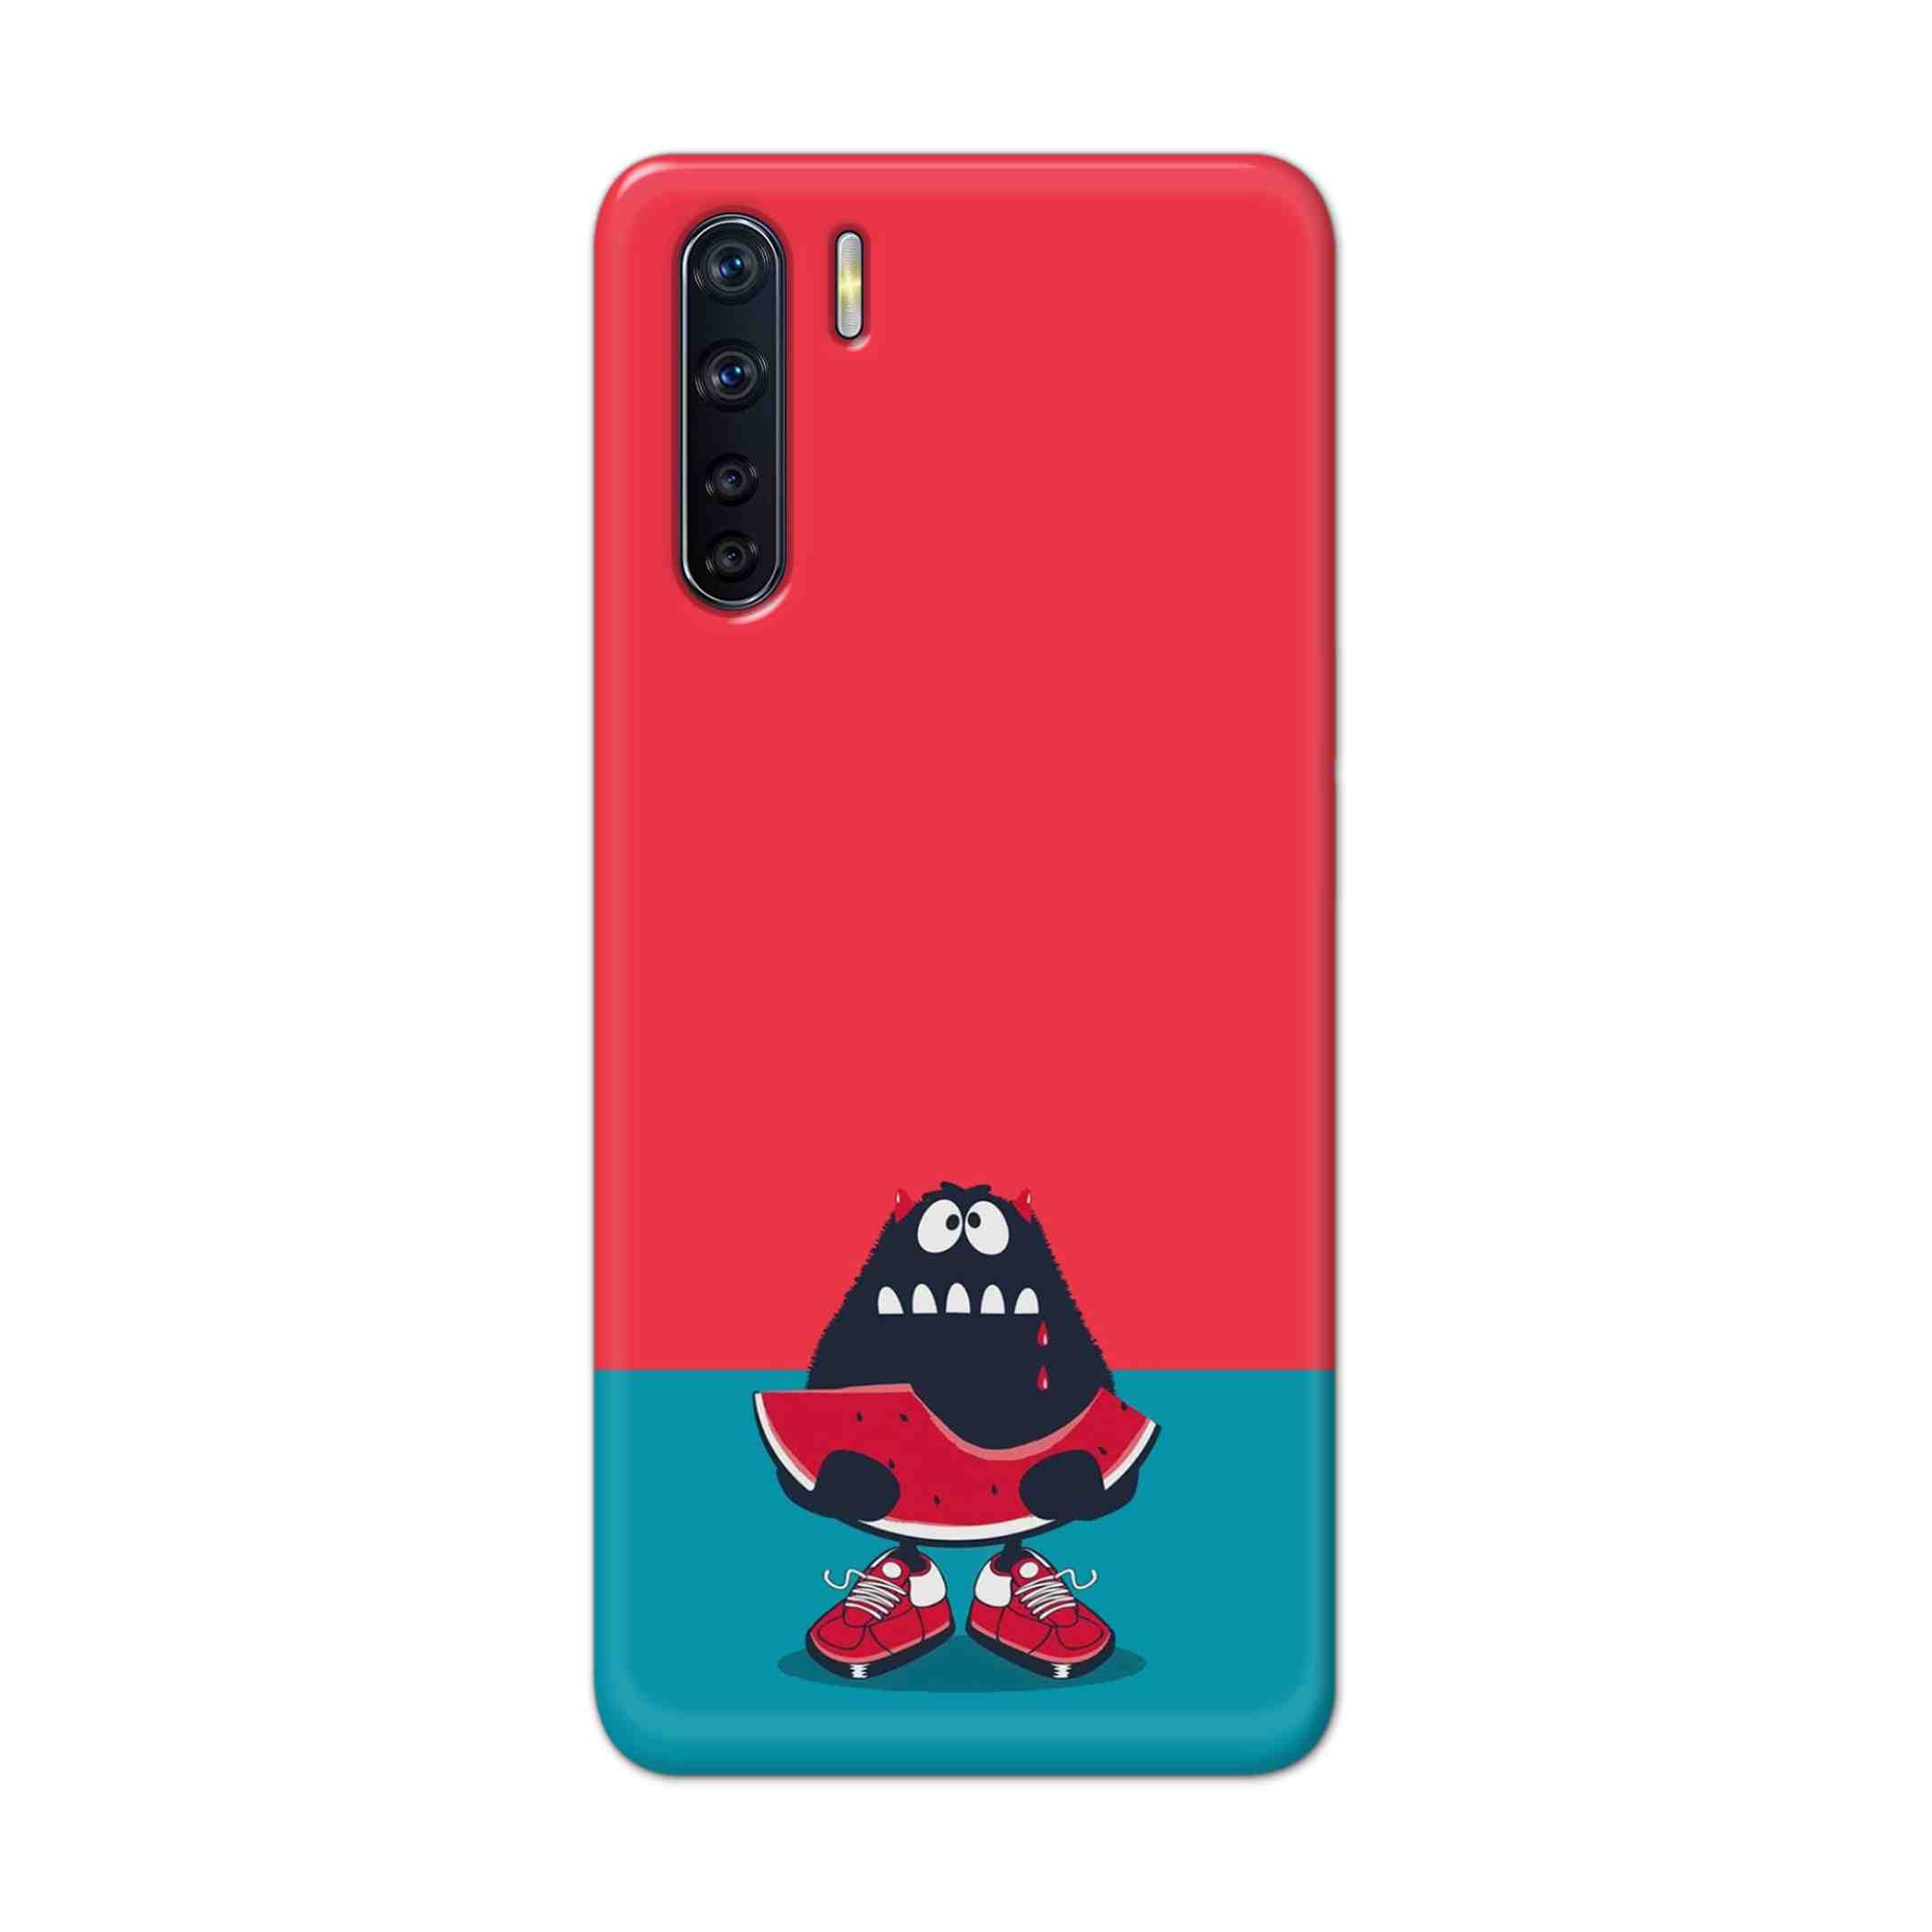 Buy Watermelon Hard Back Mobile Phone Case Cover For OPPO F15 Online